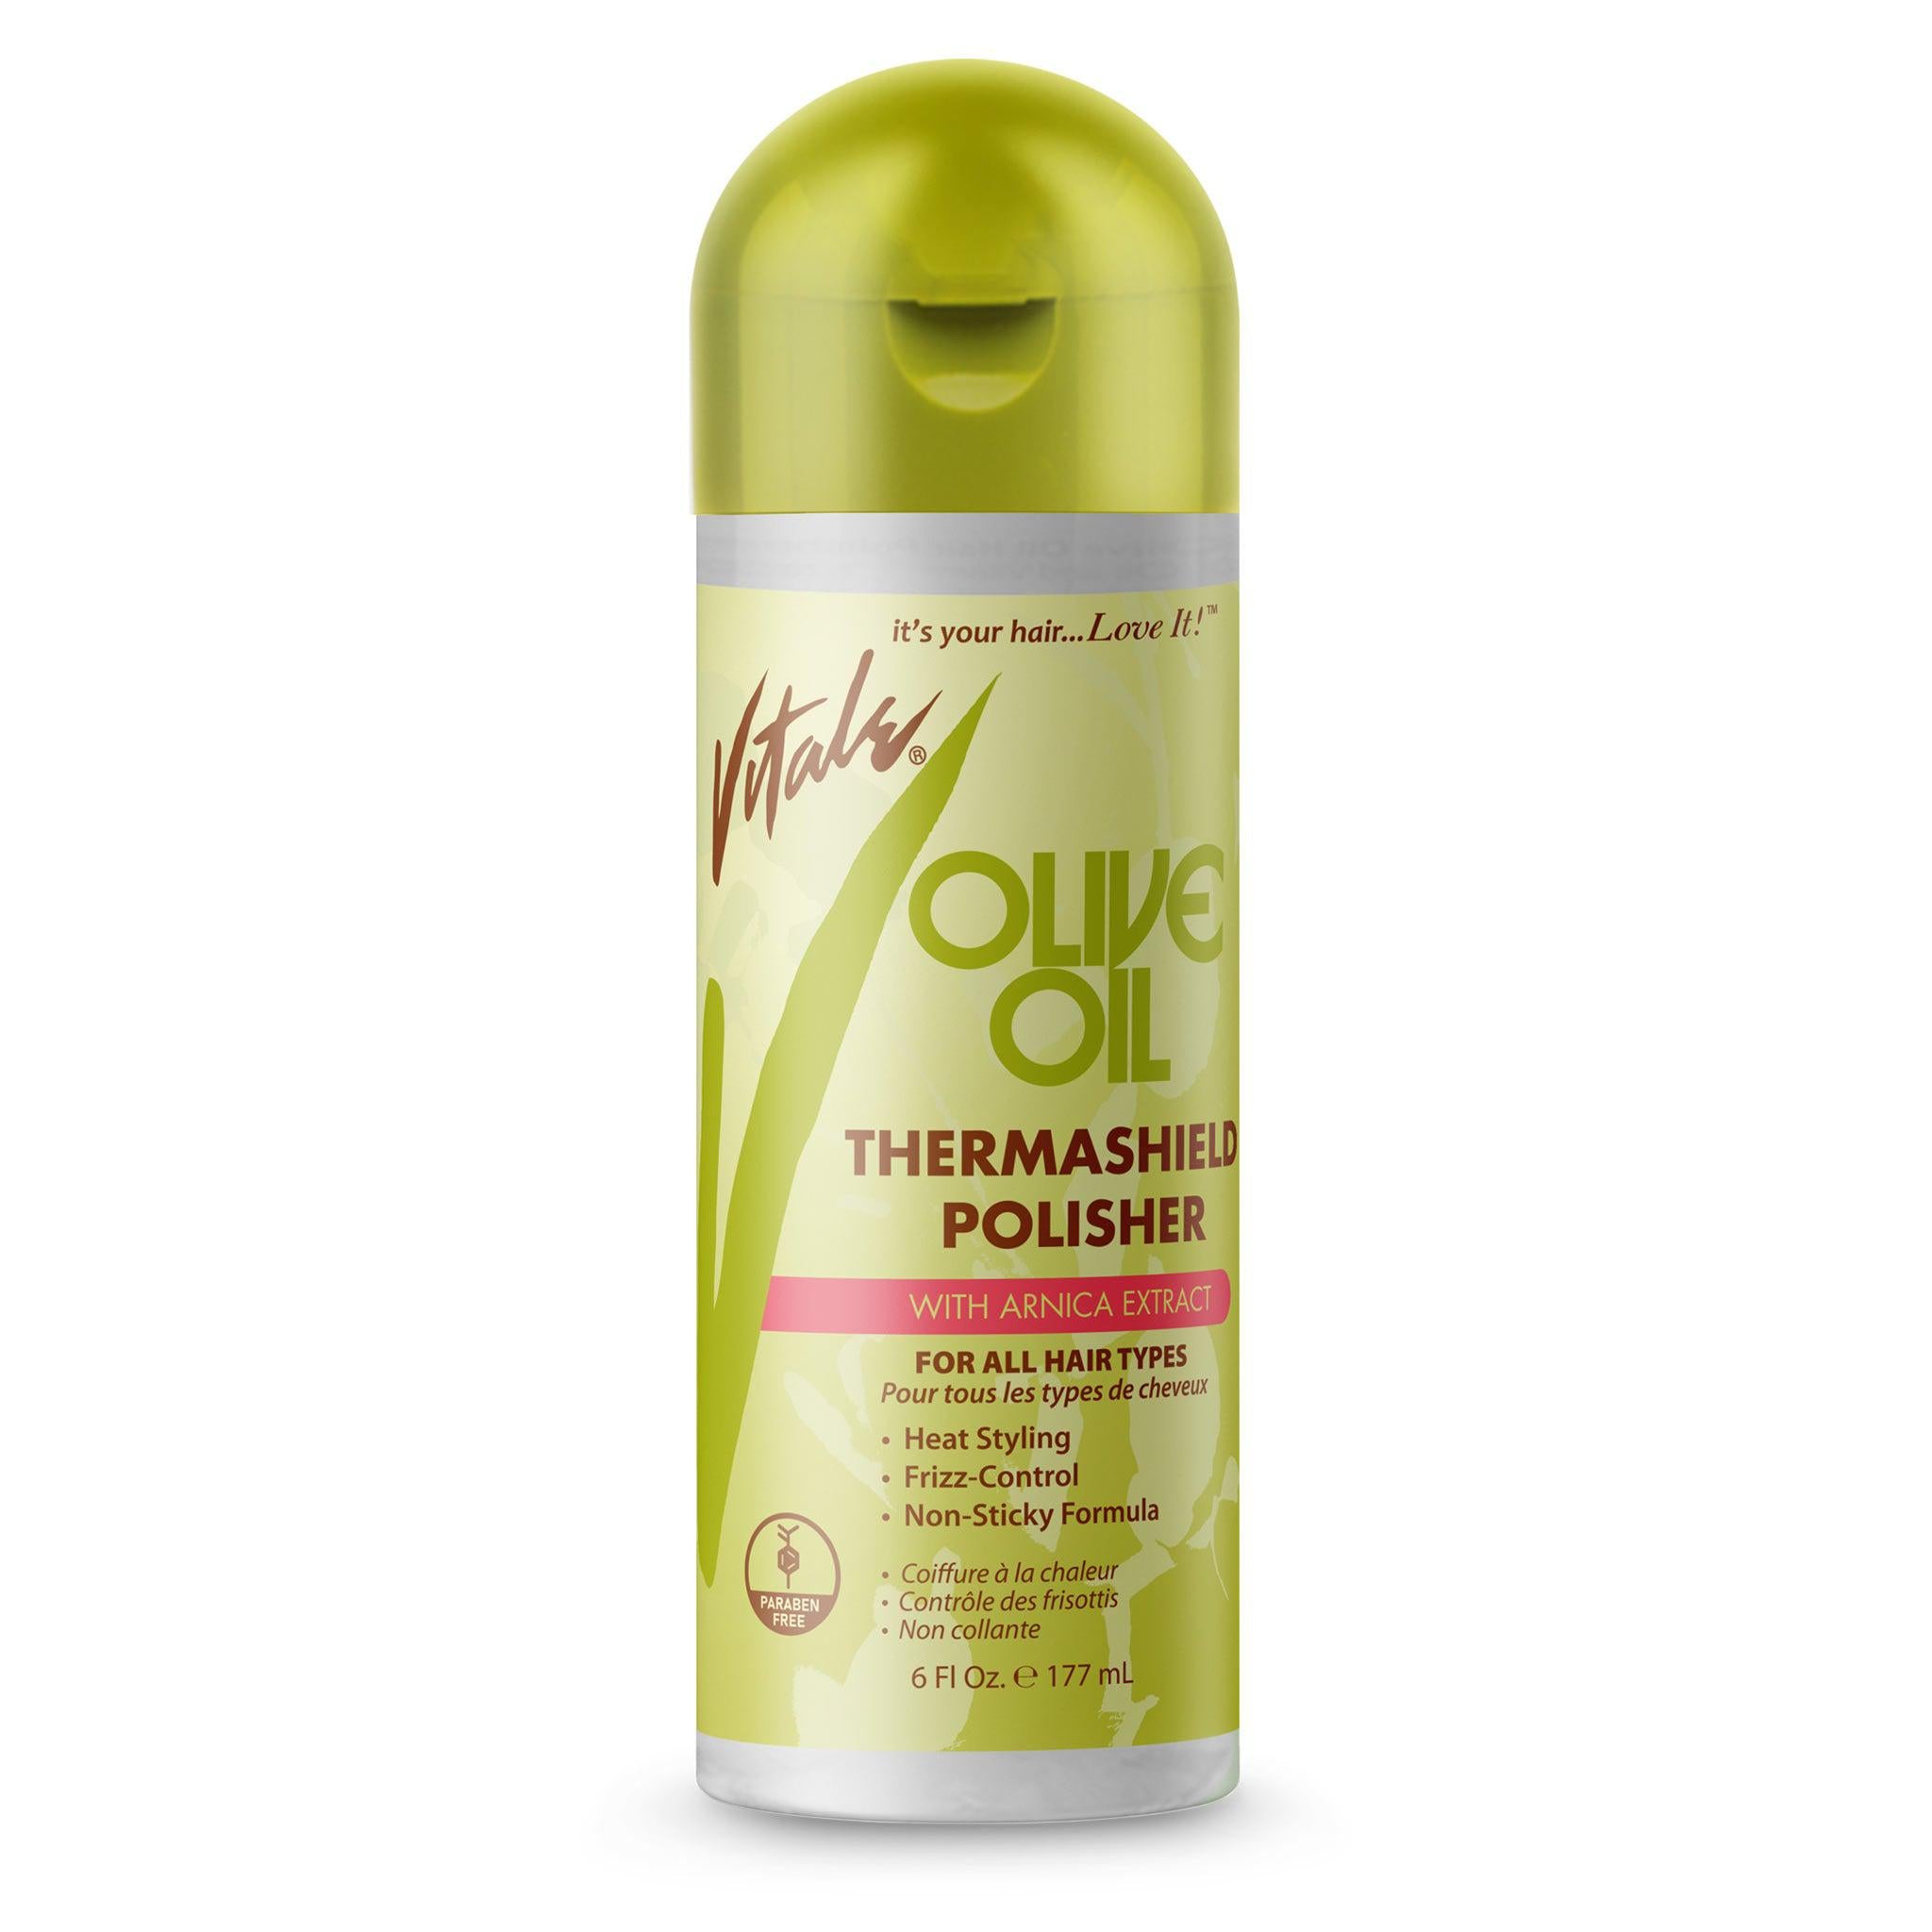 Vitalie Olive Oil Thermashield Polisher Front